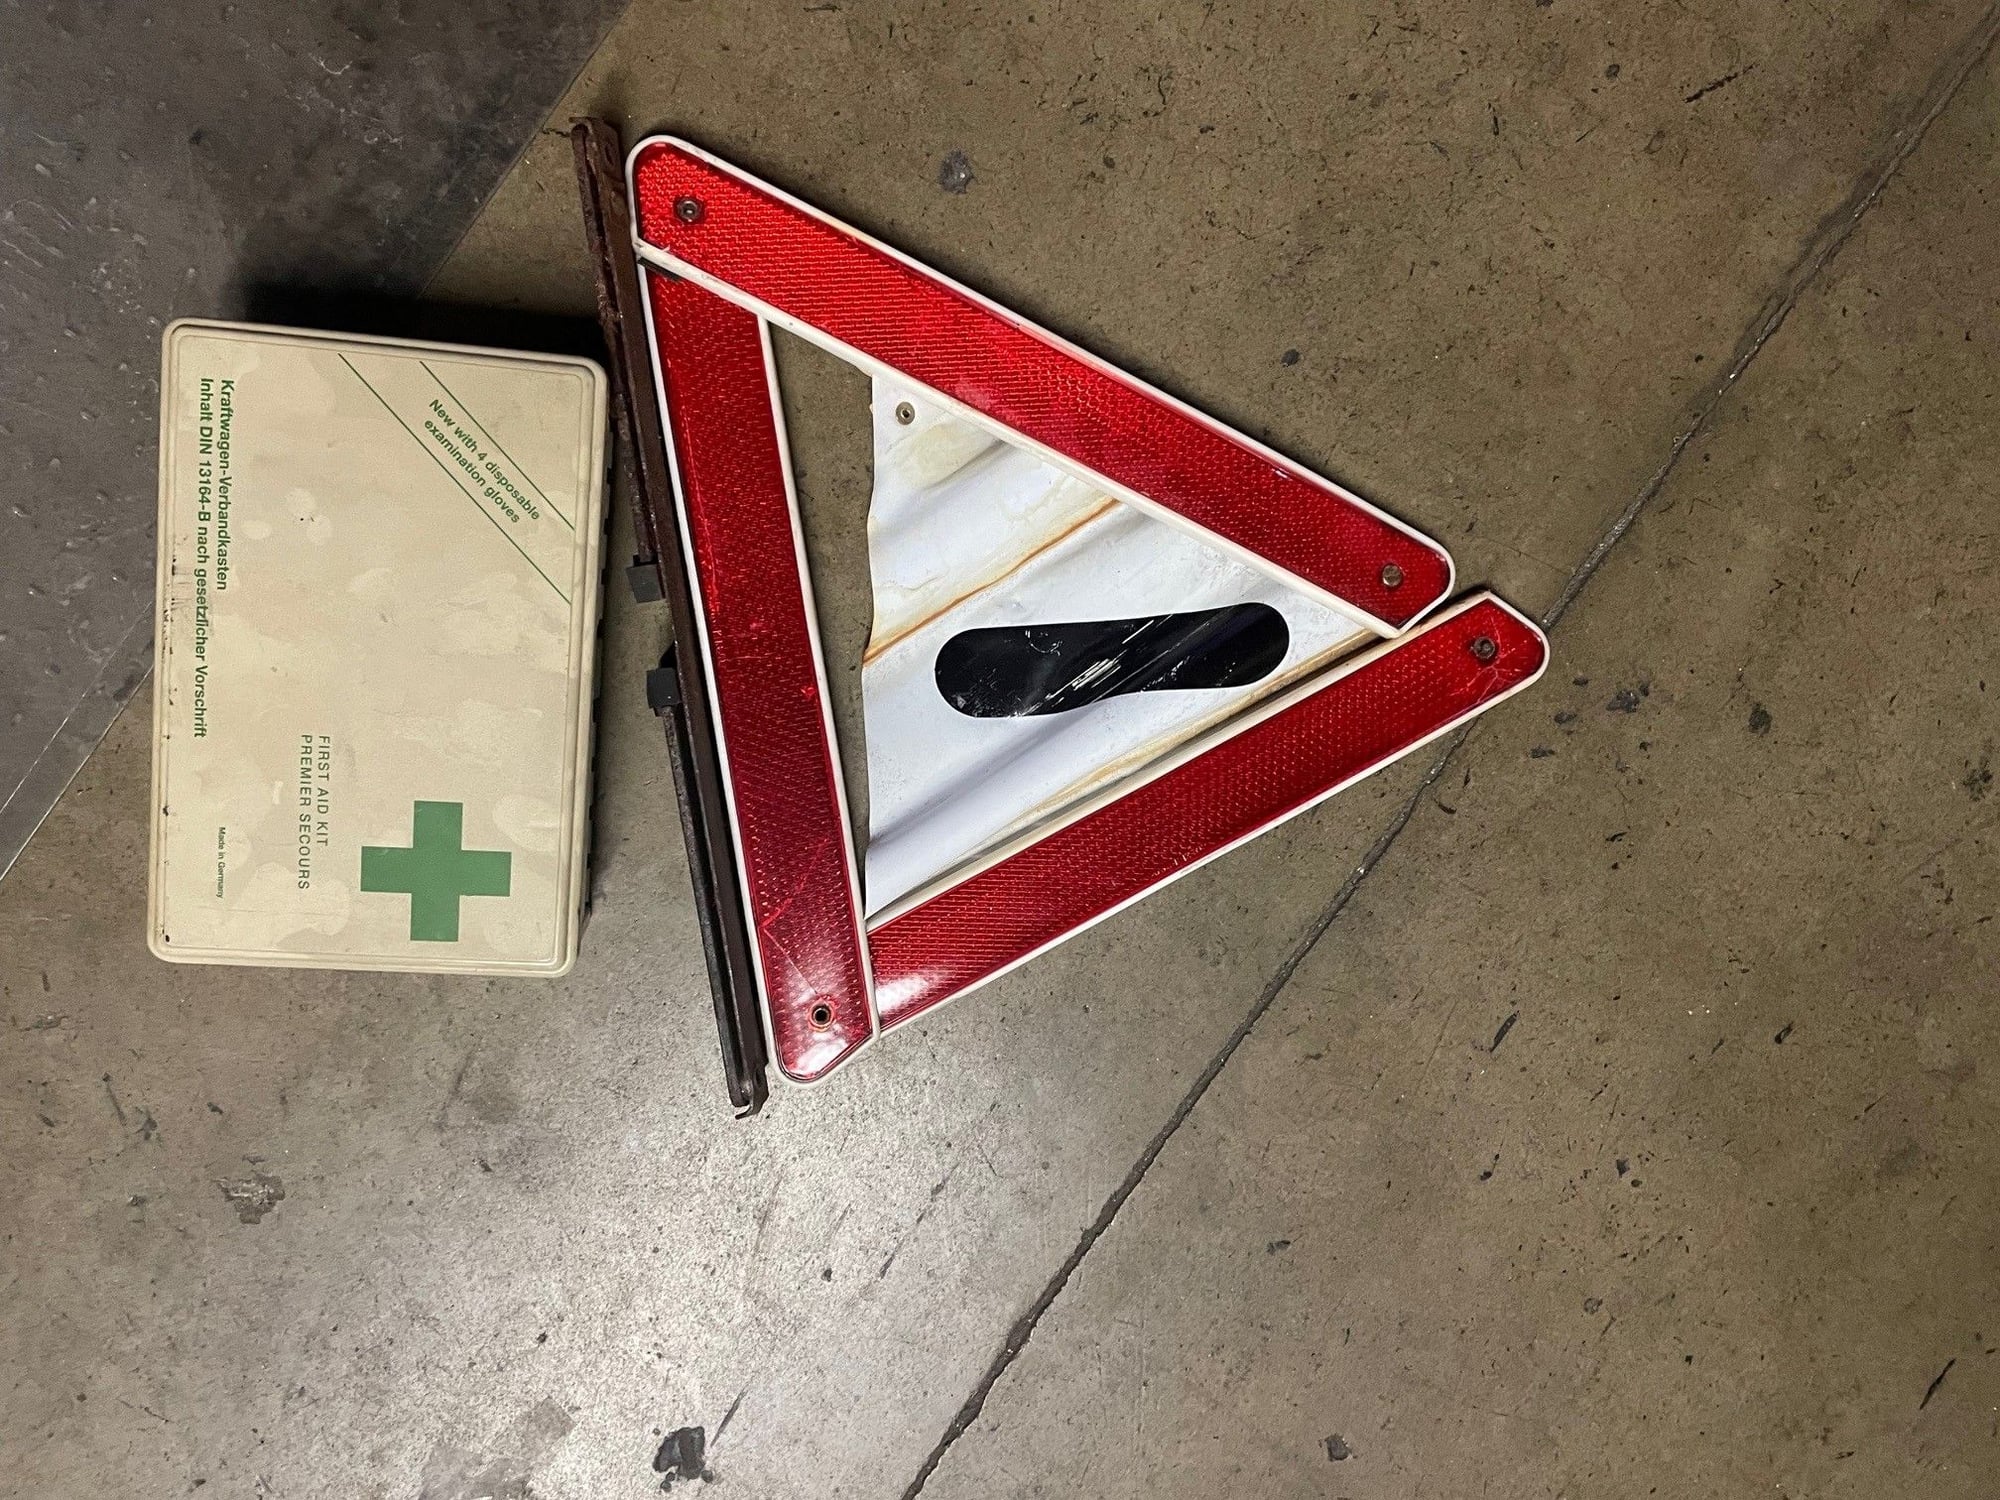 Vintage Warndreieck Warning Safety Triangle Auto Road Hazard Made in  Germany